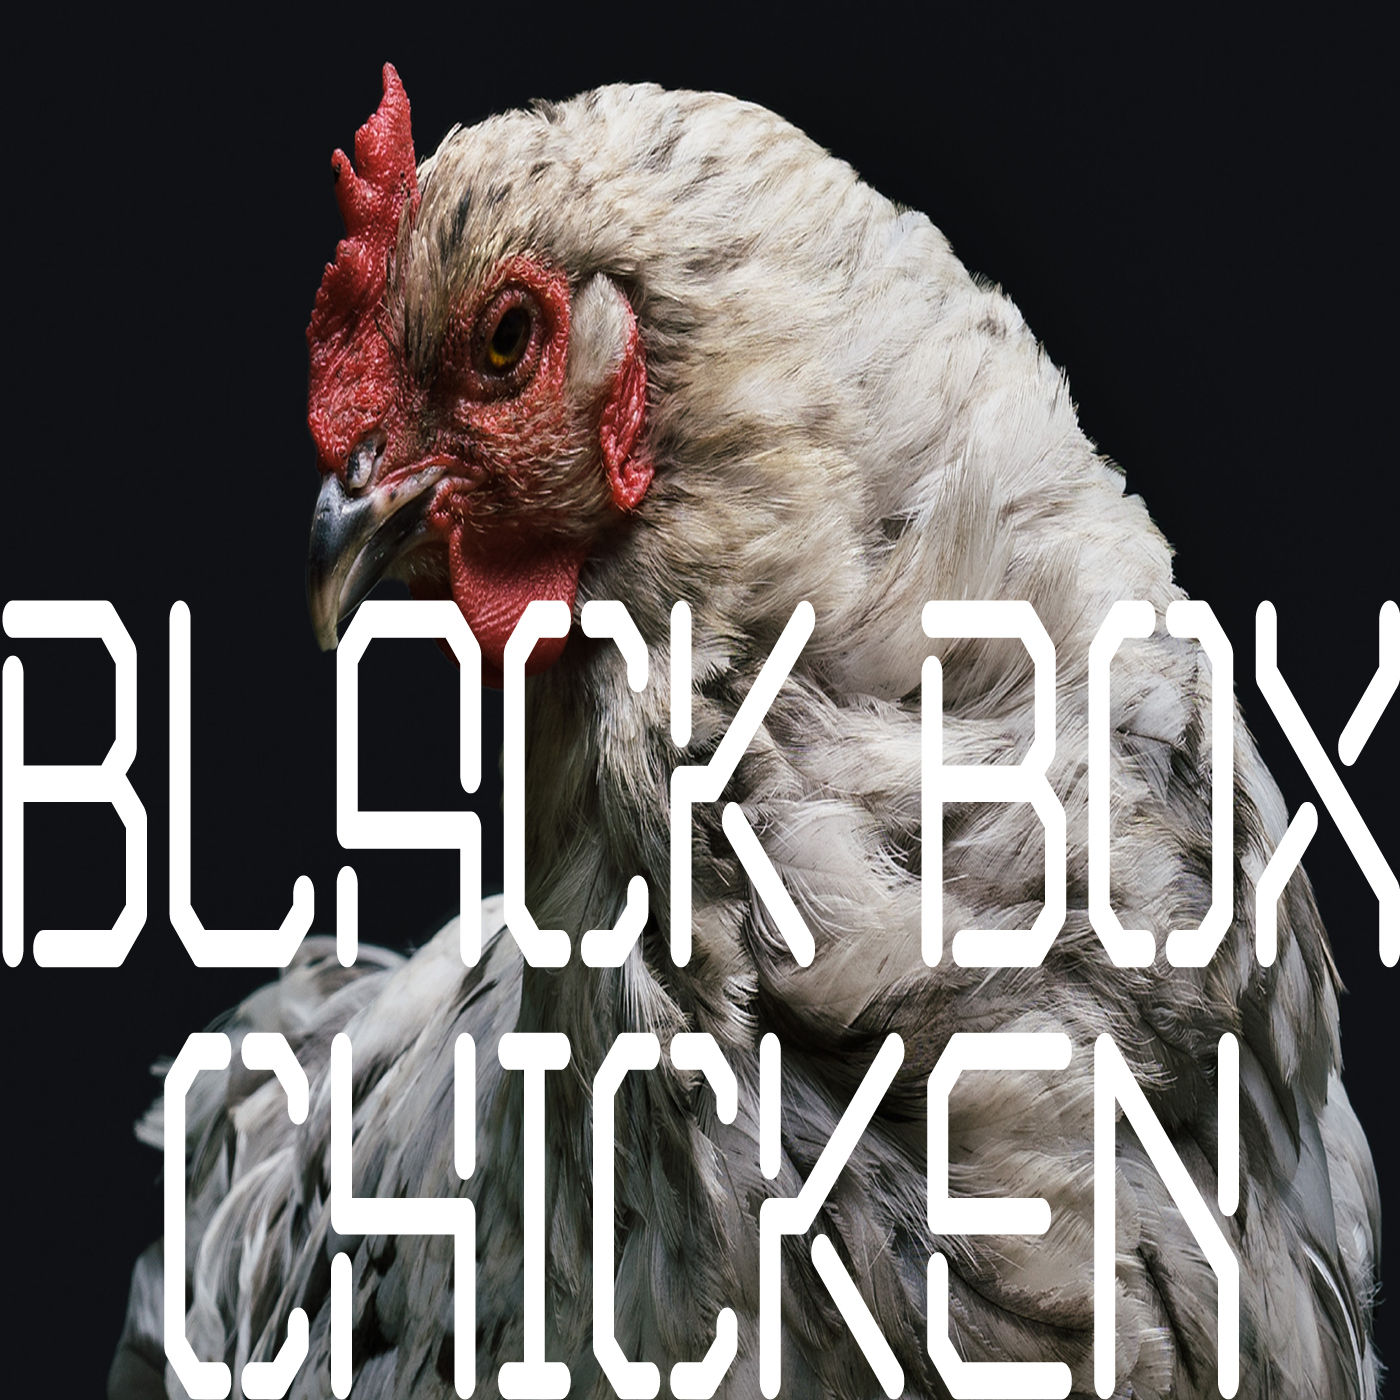 BLACK BOX - Chicken(유머, 엽기, 신남, 비트, 즐거움, 흥겨움, 클럽, 흥함, 활기, 행복, 경쾌, 일렉)